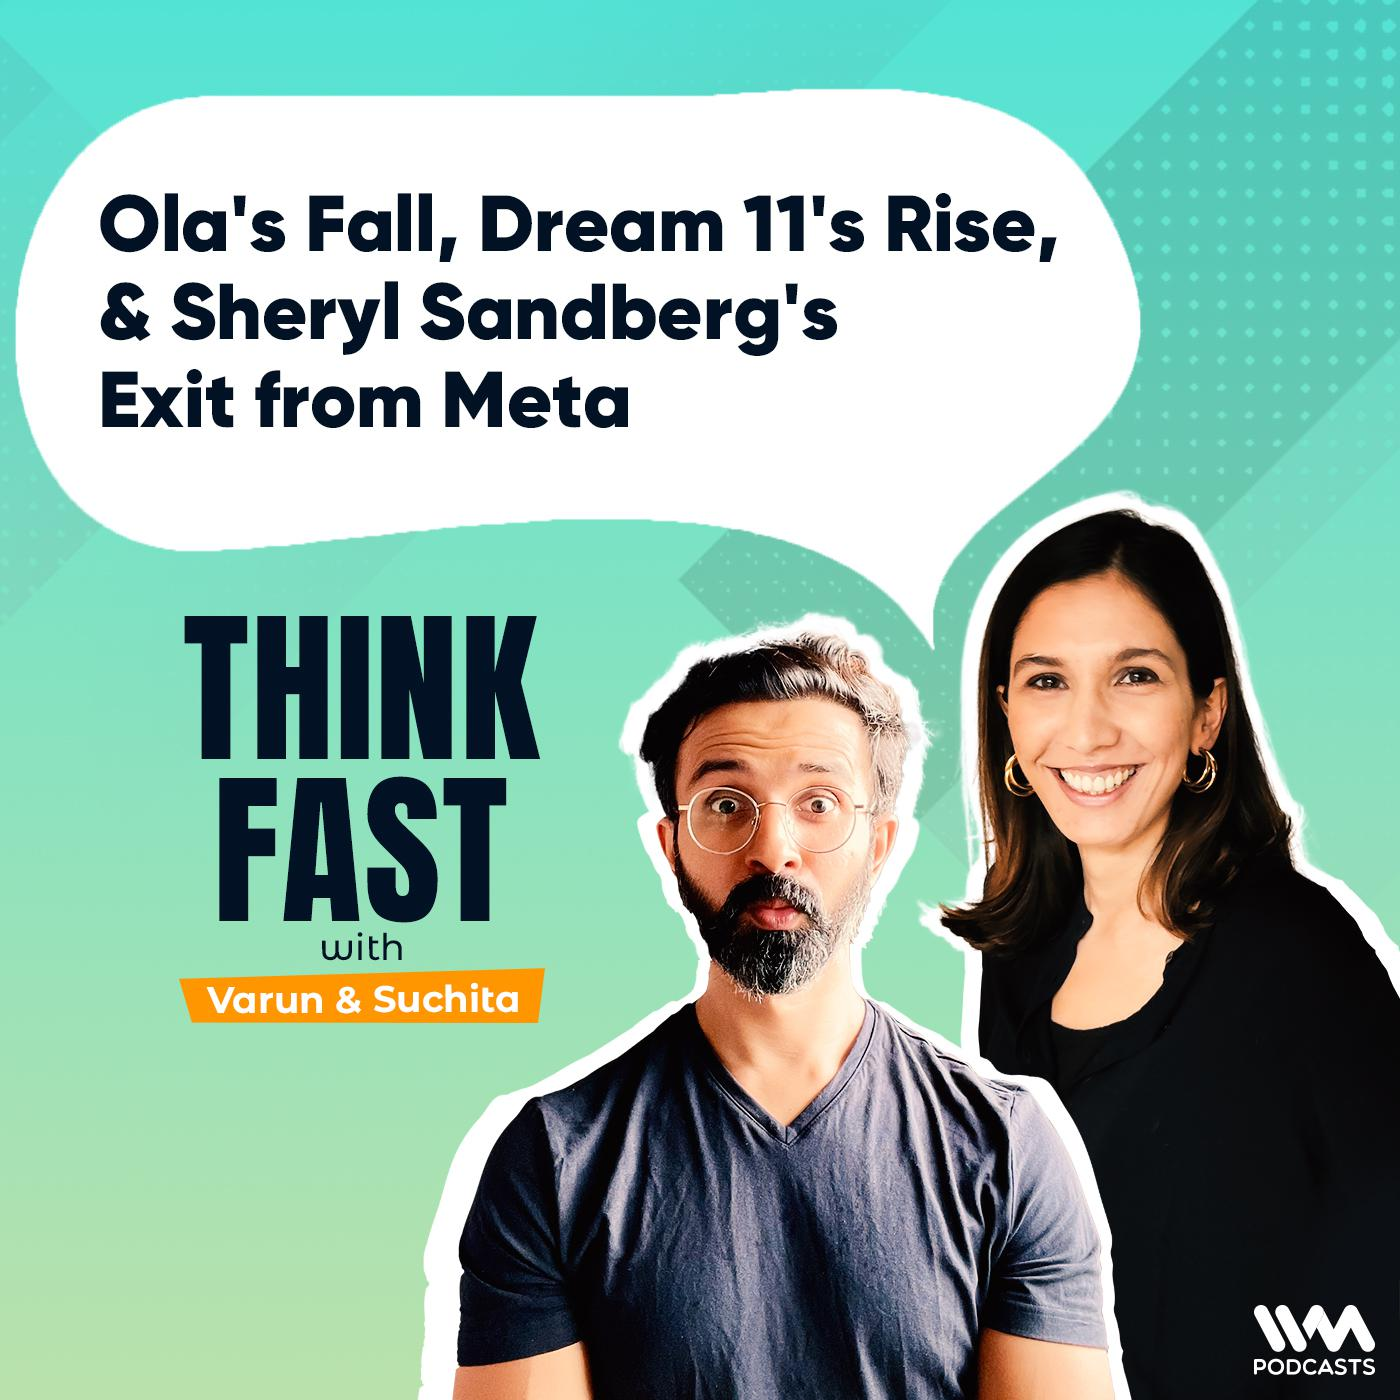 Ola’s Fall, Dream 11’s Rise, & Sheryl Sandberg’s Exit from Meta